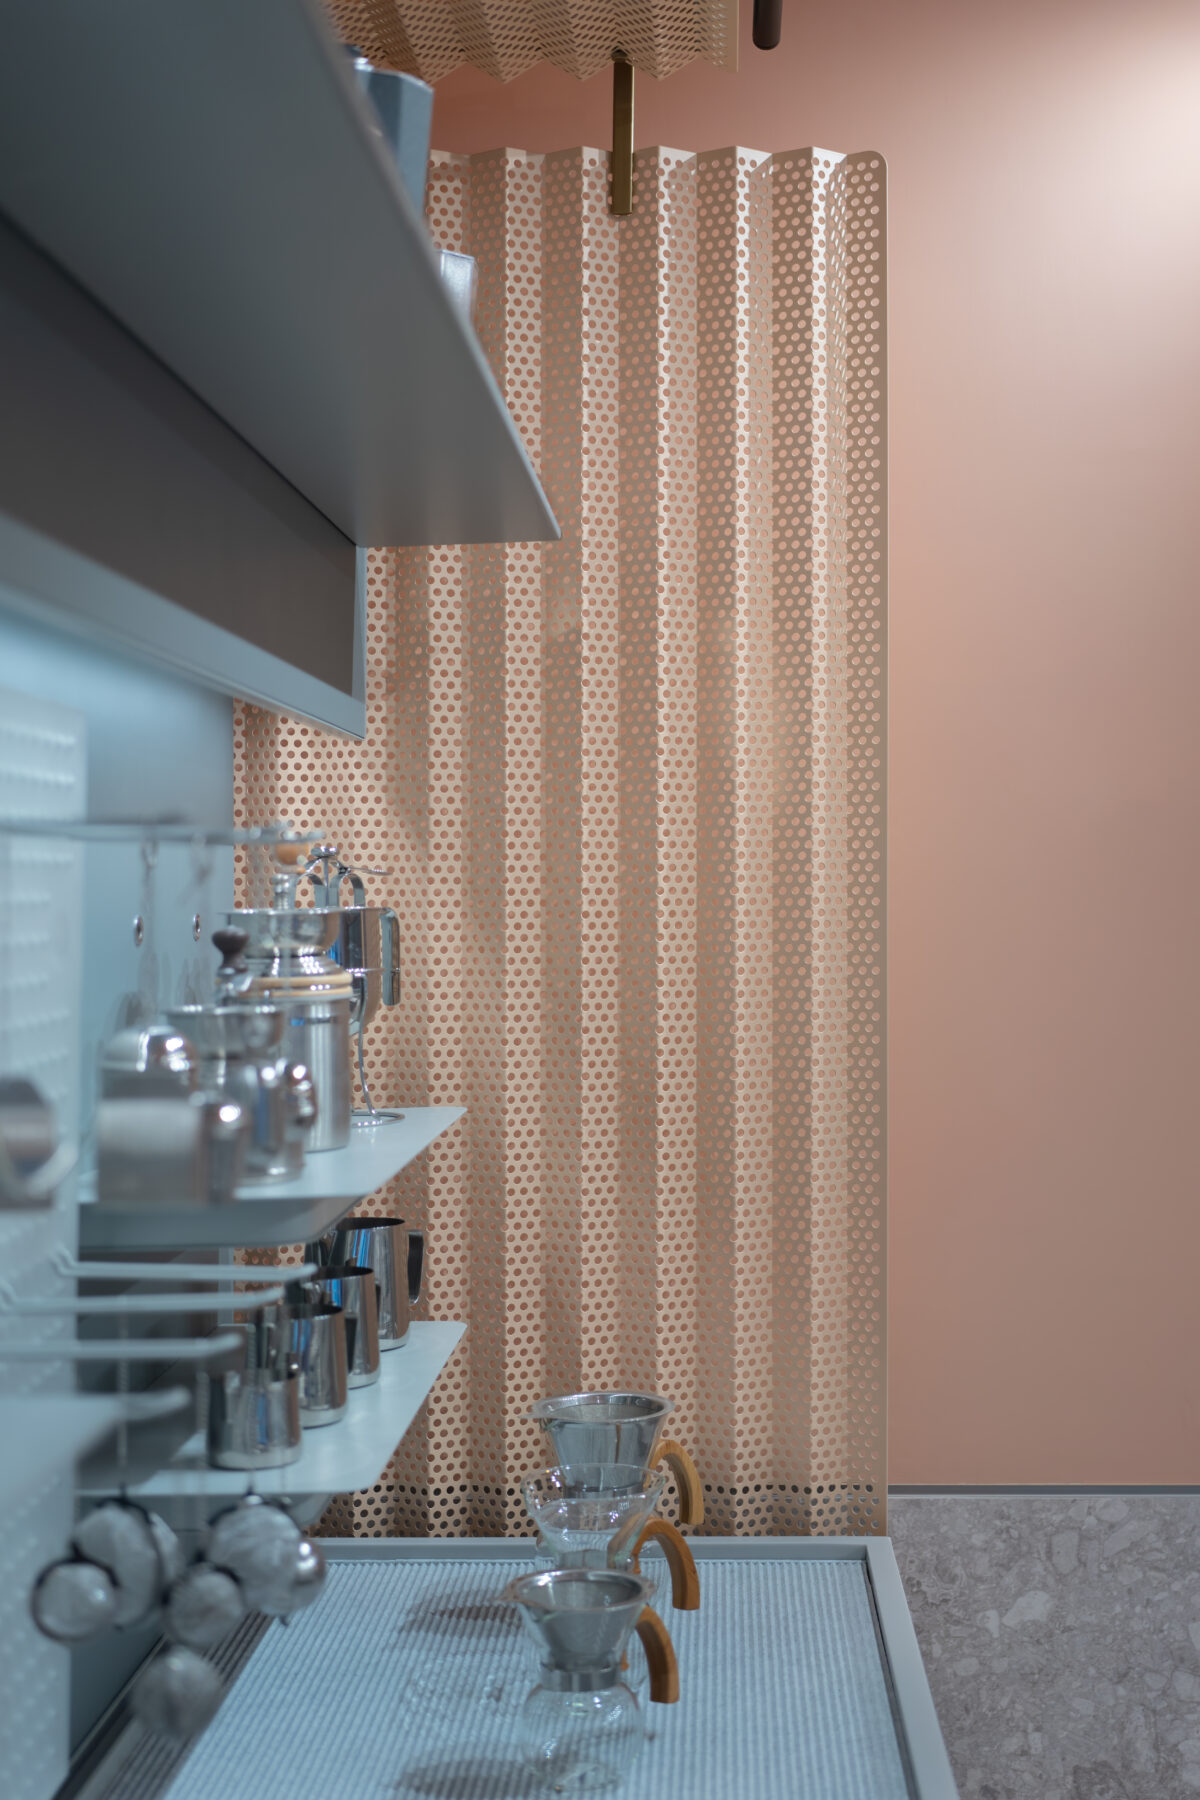 Archisearch Studio X creates sumptuous kitchen gadget showroom for key supplier to Williams Sonoma